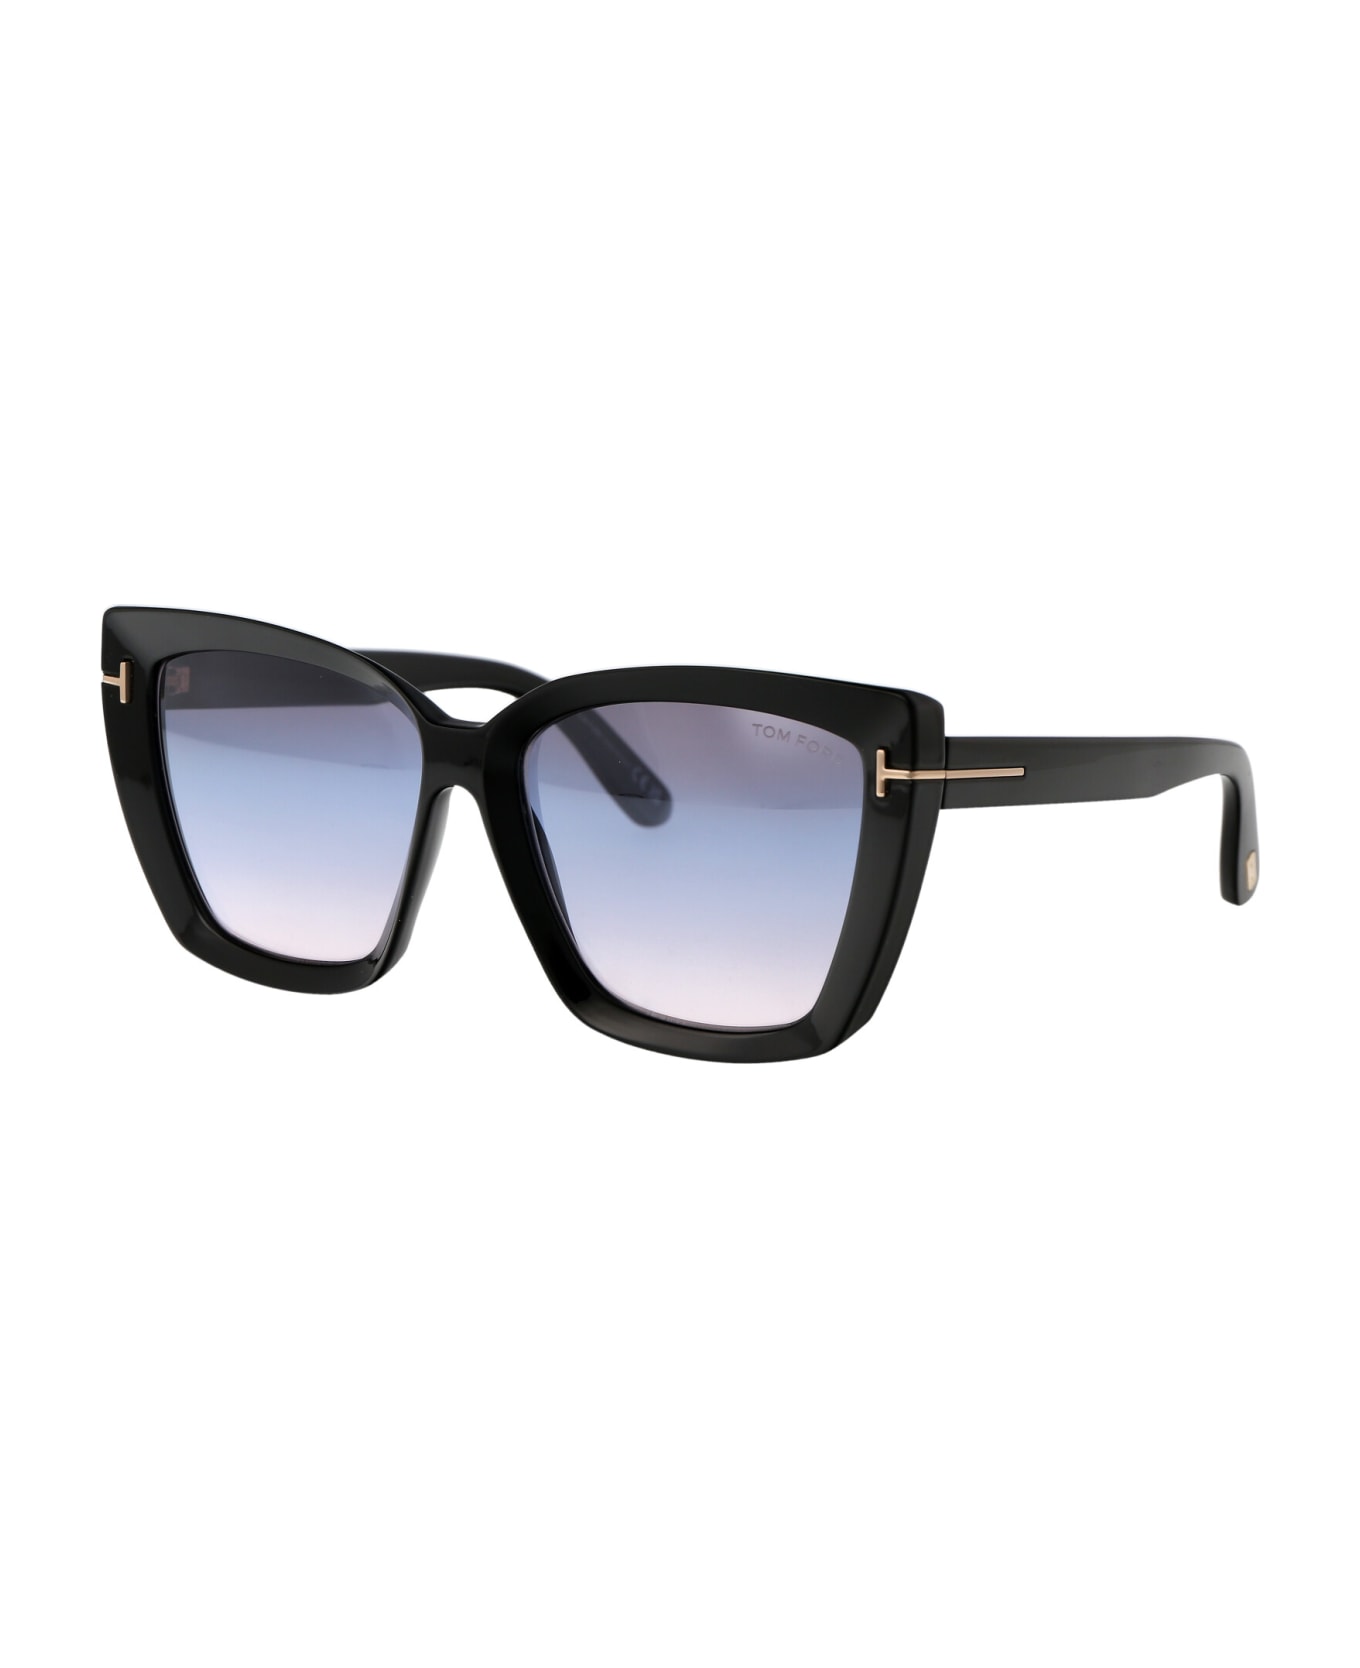 Tom Ford Eyewear Scarlet-02 Sunglasses - 01B Nero Lucido / Fumo Grad